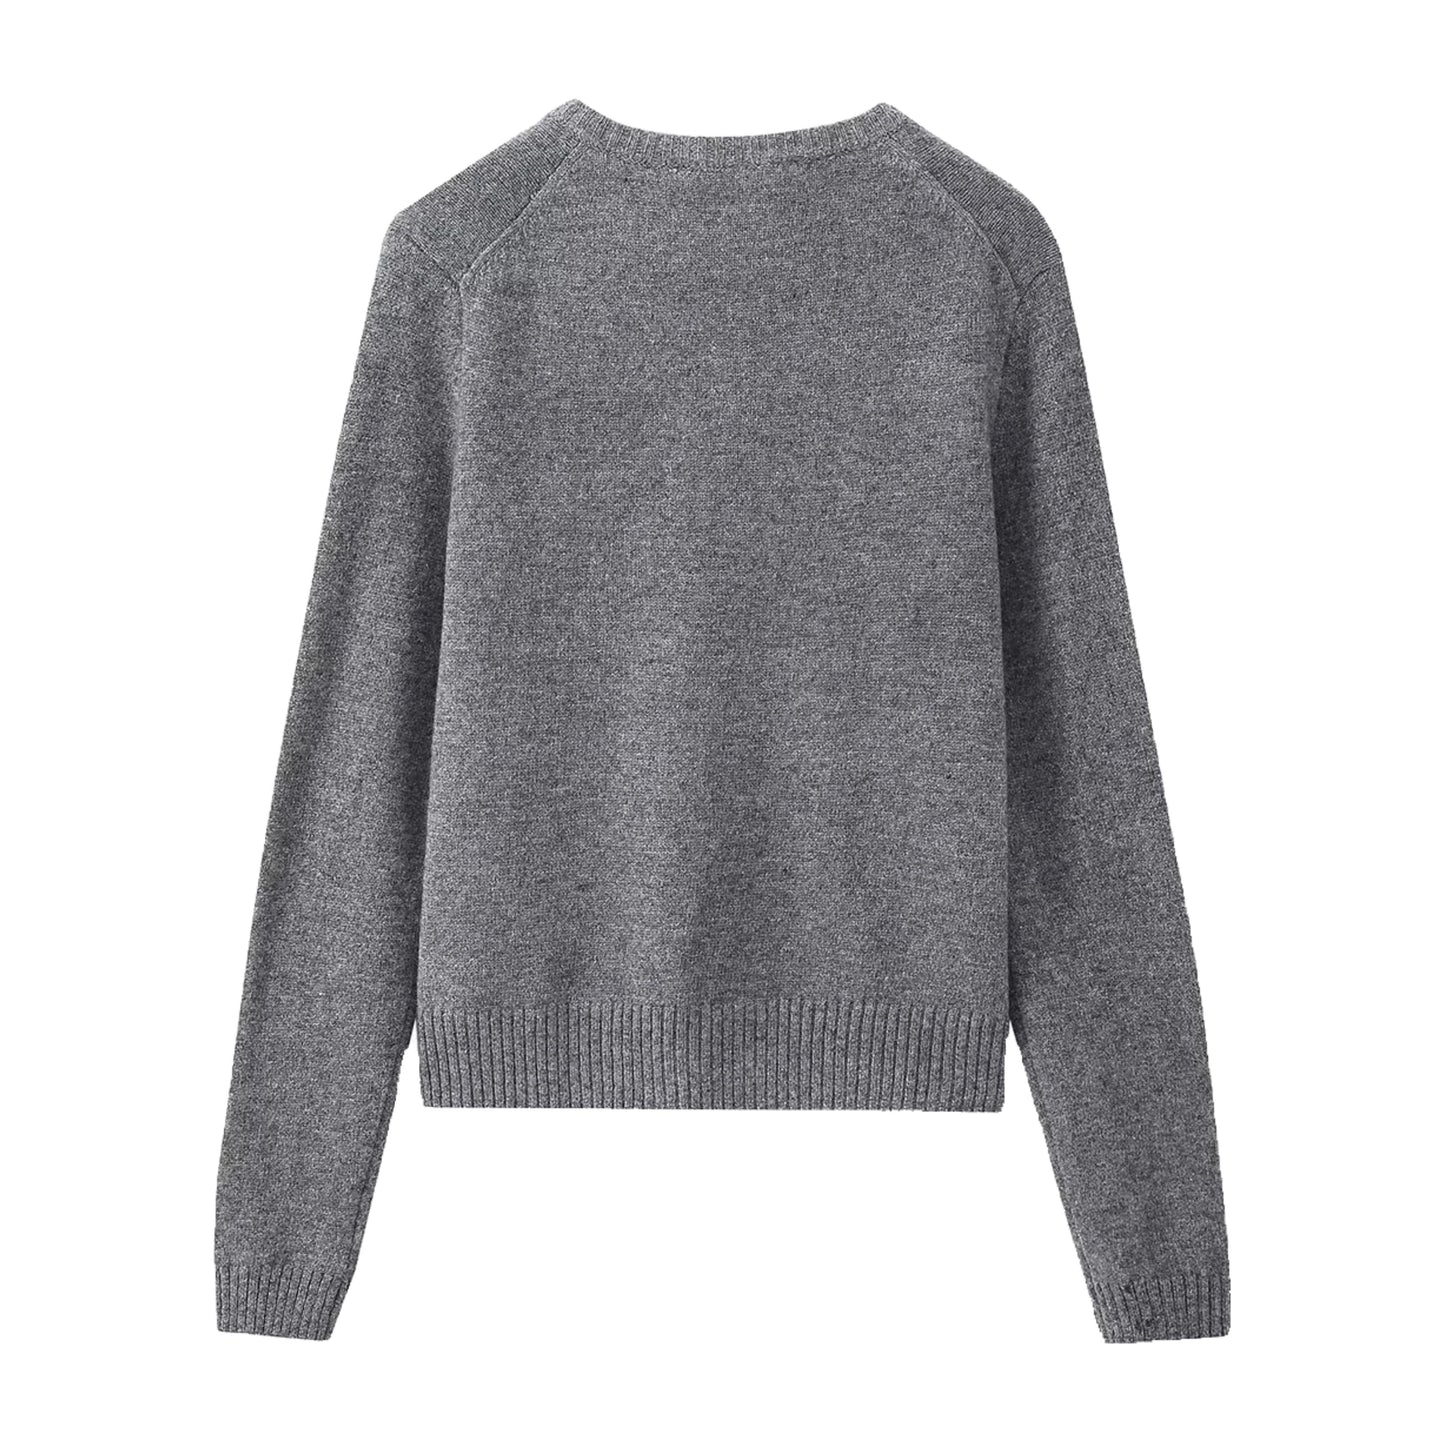 Dark Gray Knit Cardigan Sweater